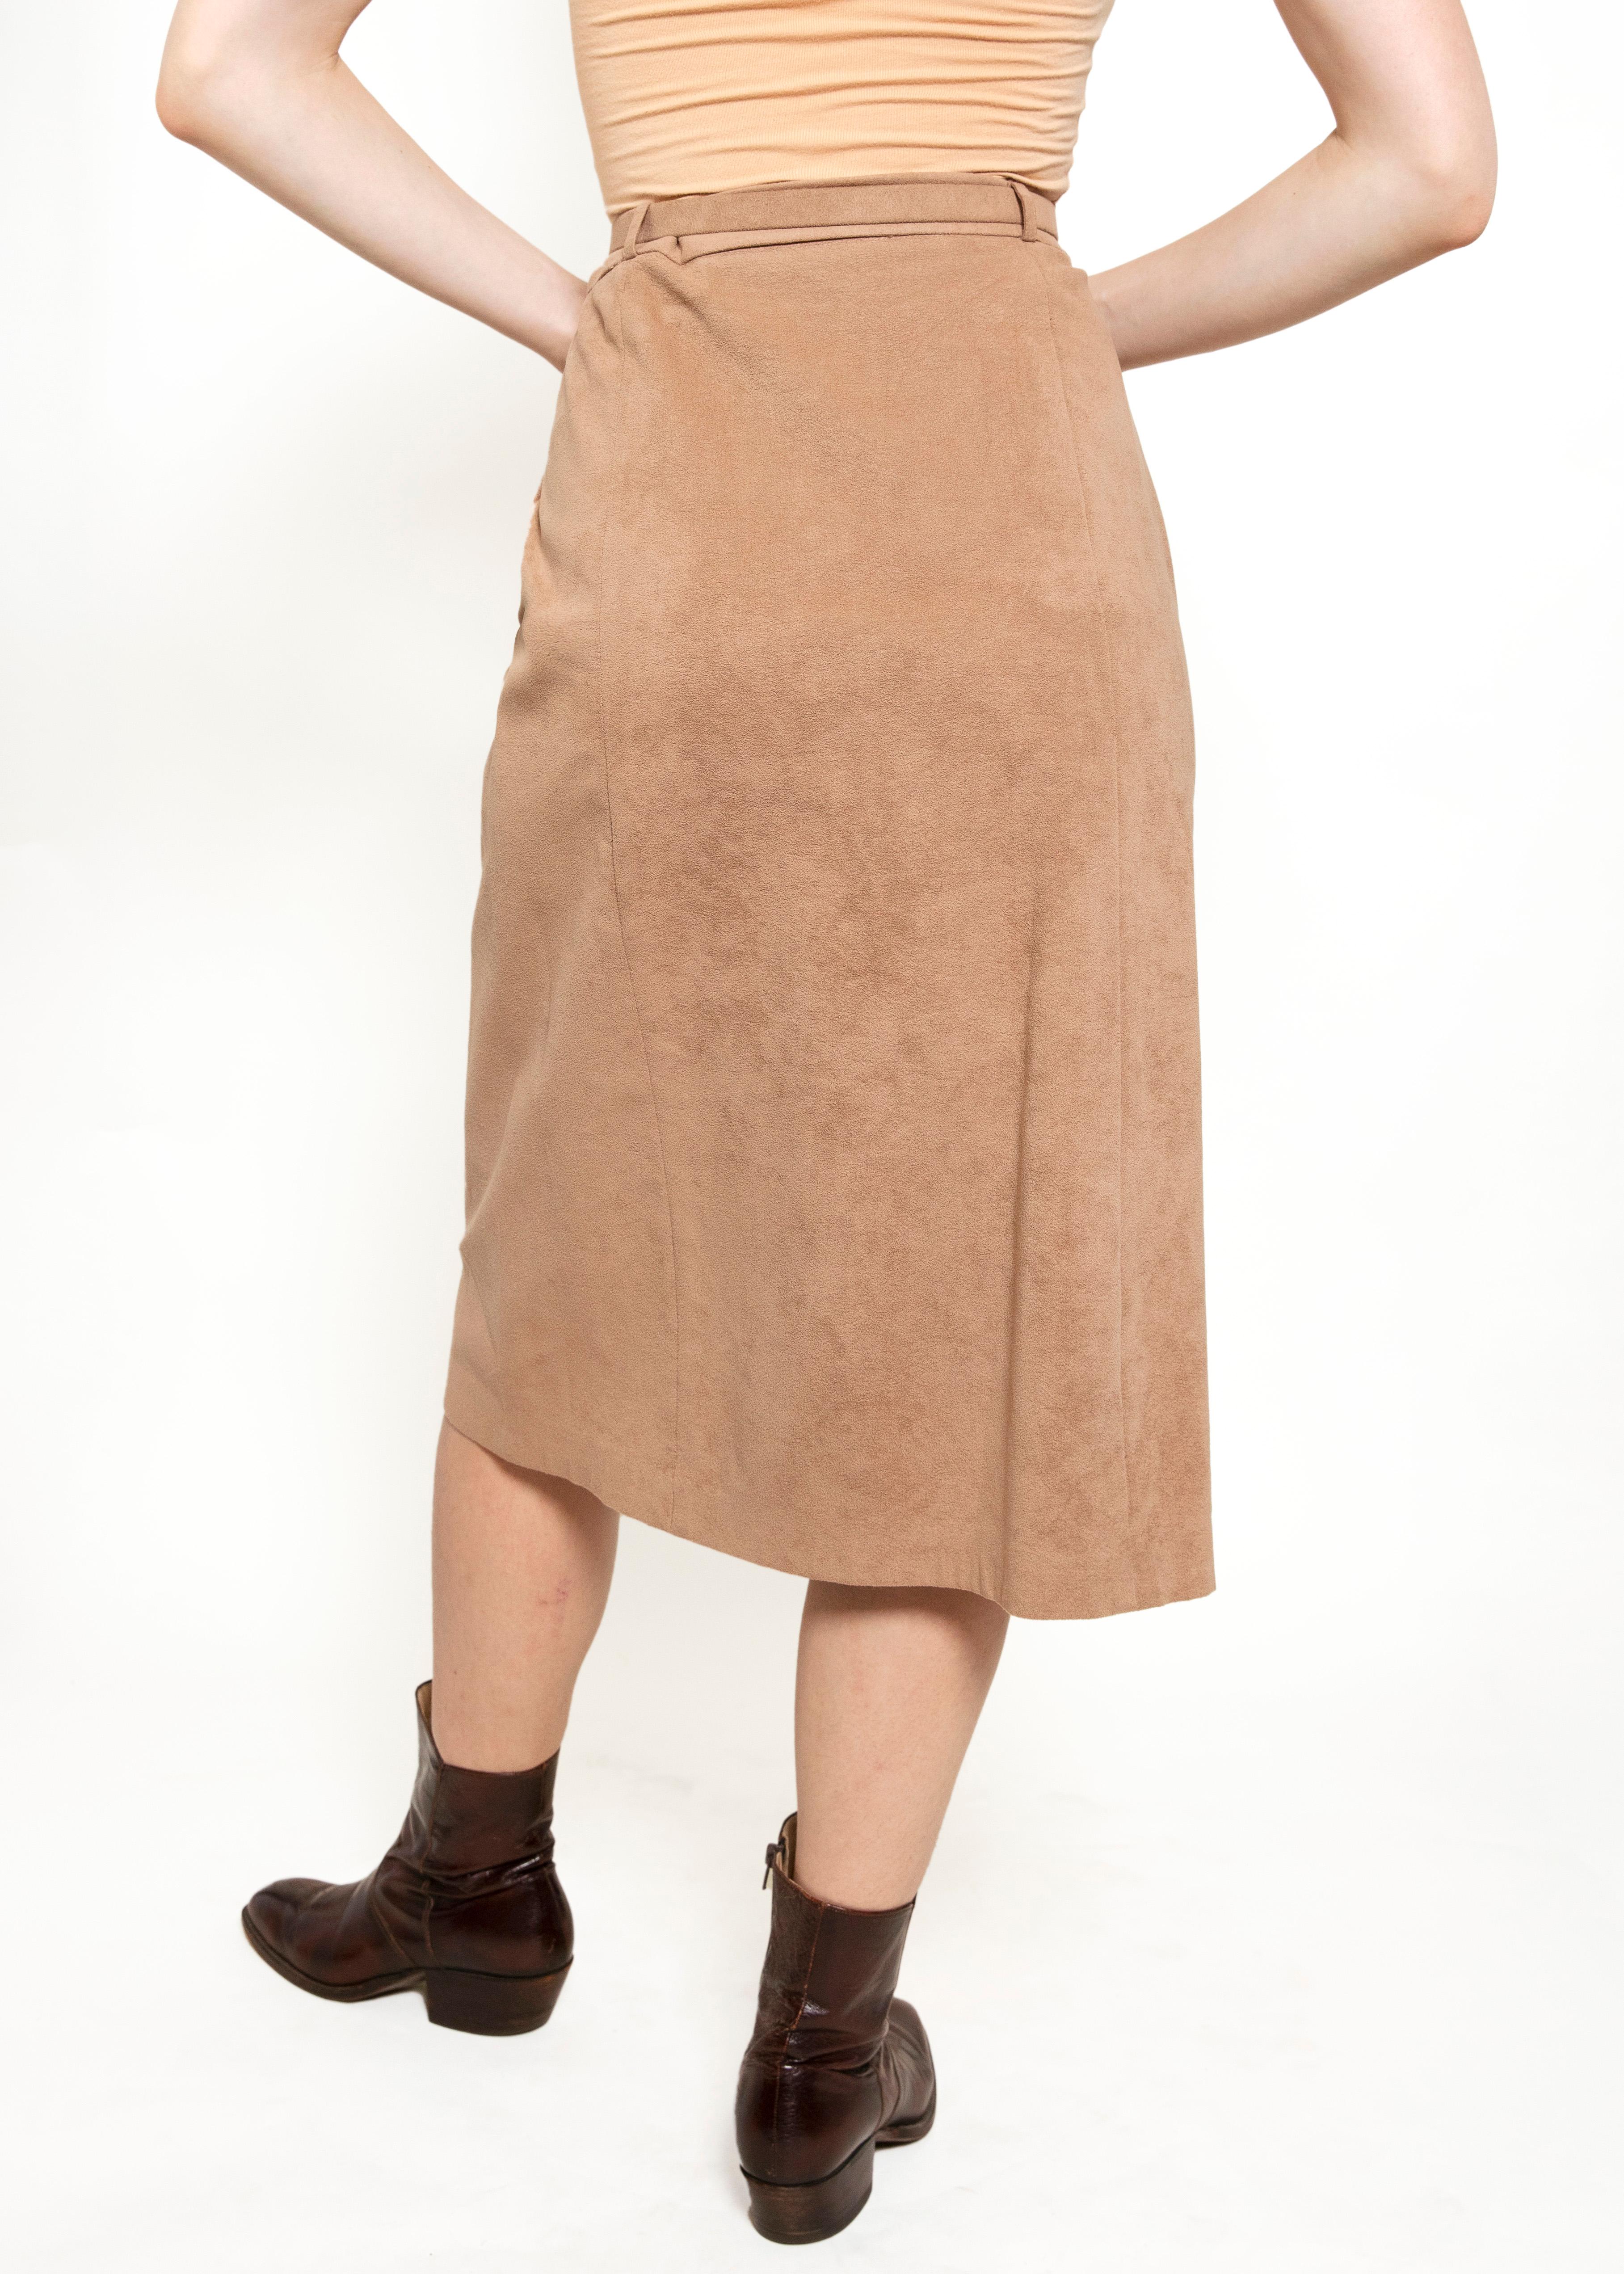 Ultrasuede Skirt & Trench Set For Sale 2